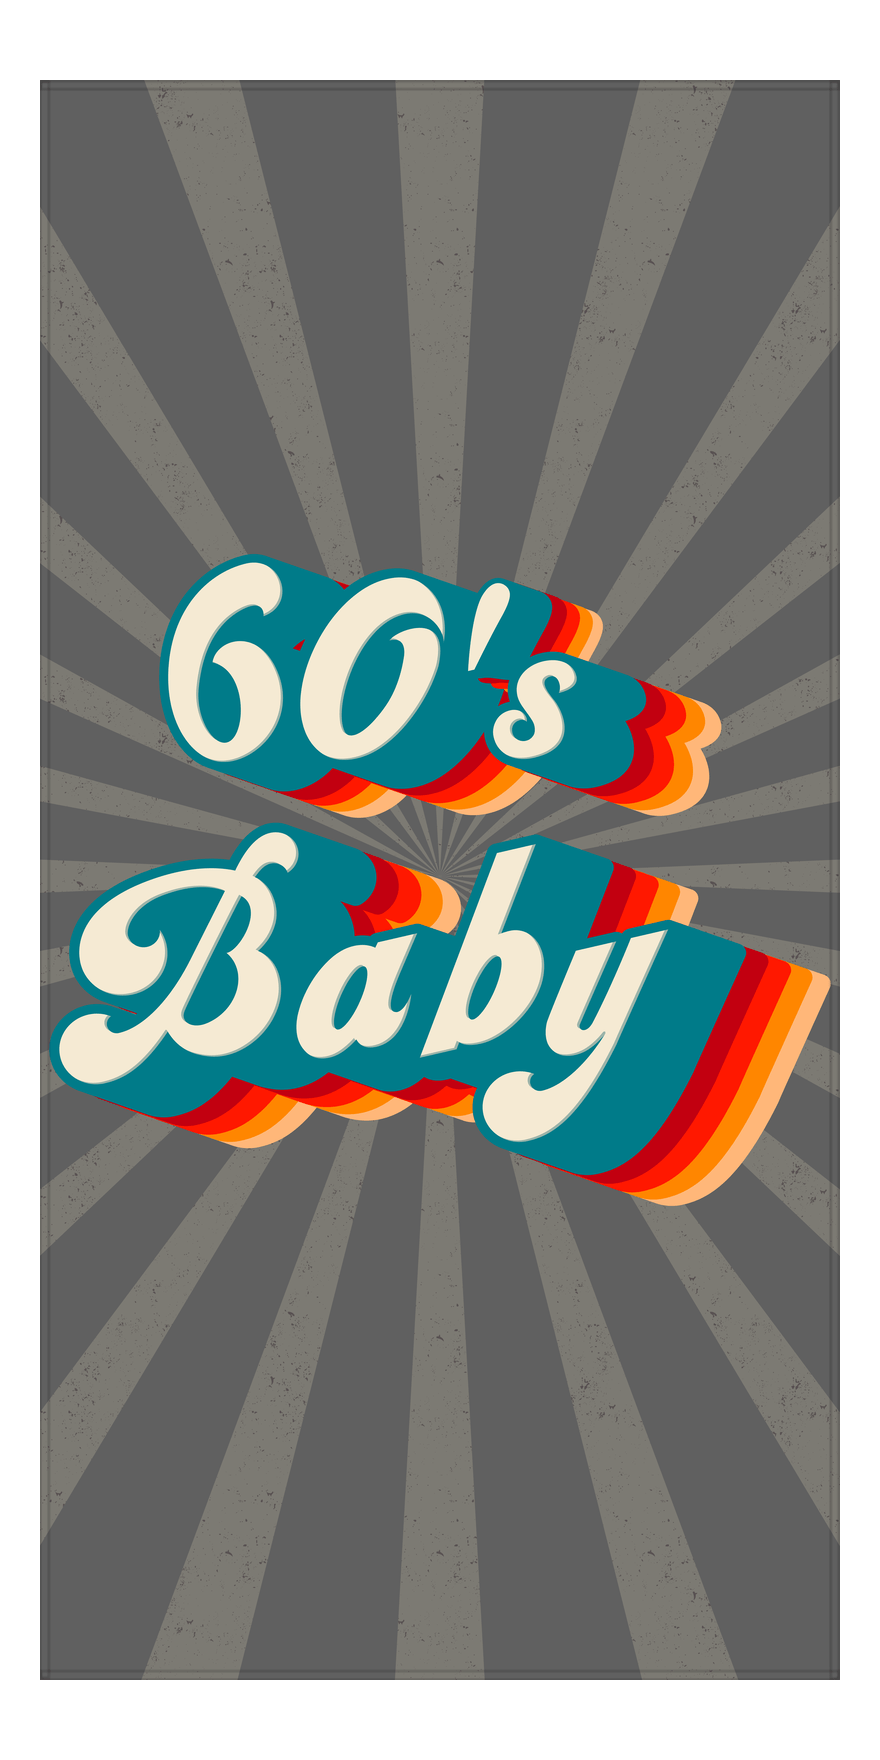 Retro Beach Towel - 60's Baby - Front View